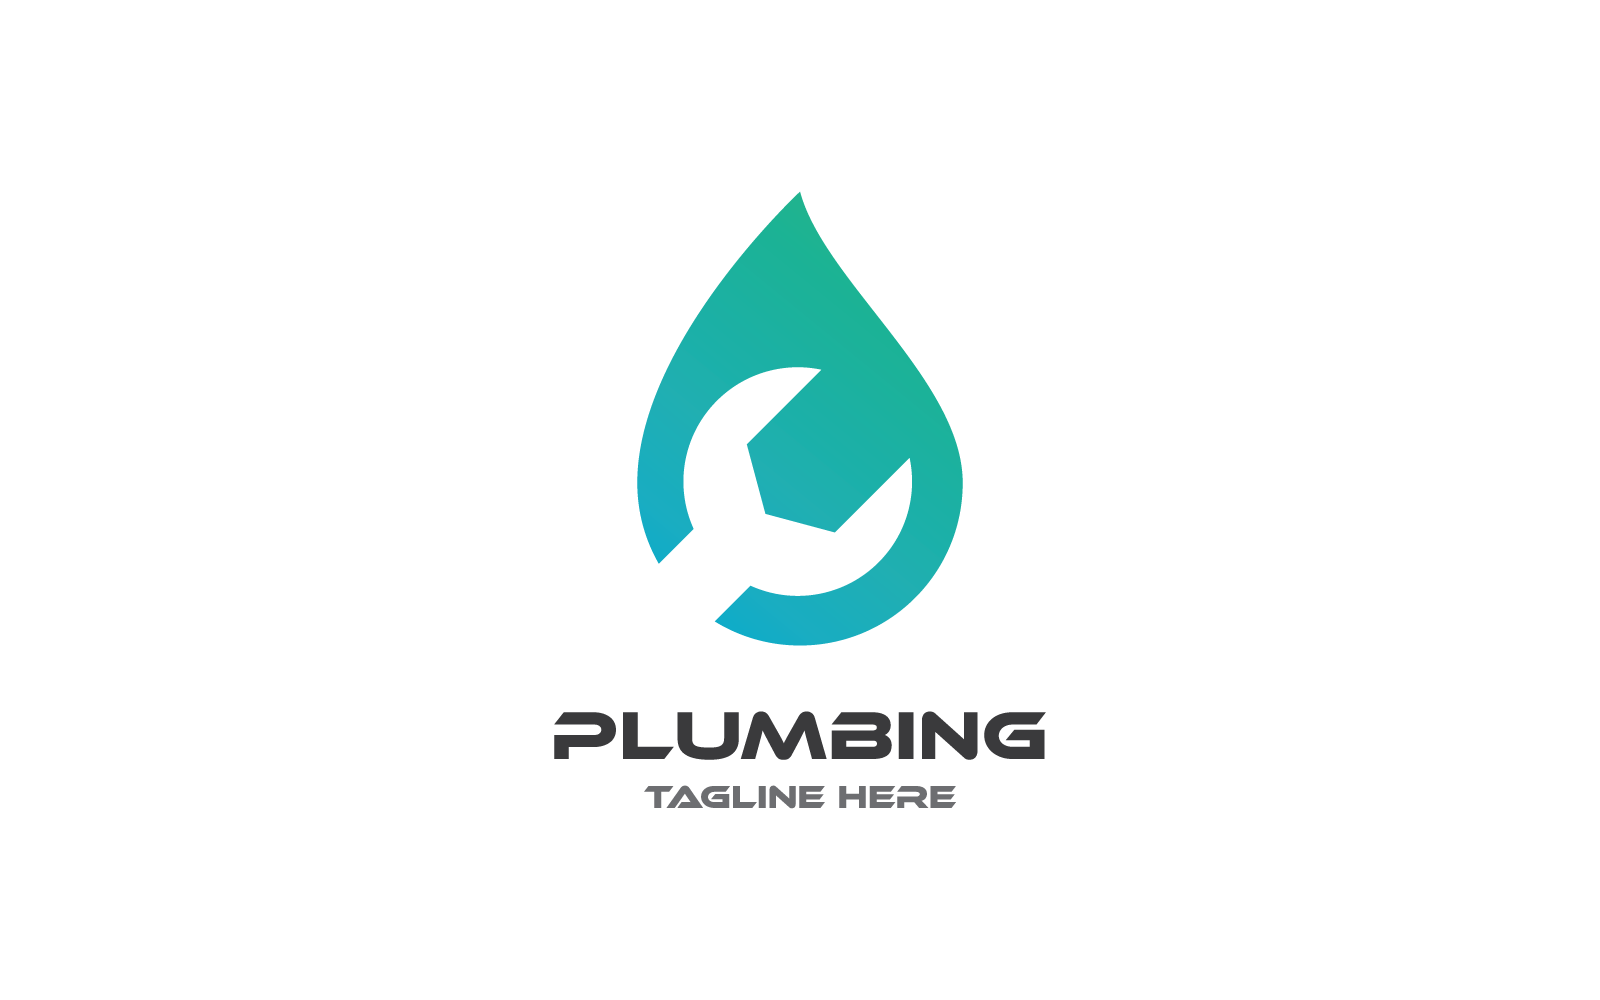 Plumbing logo vector illustration design business template Logo Template